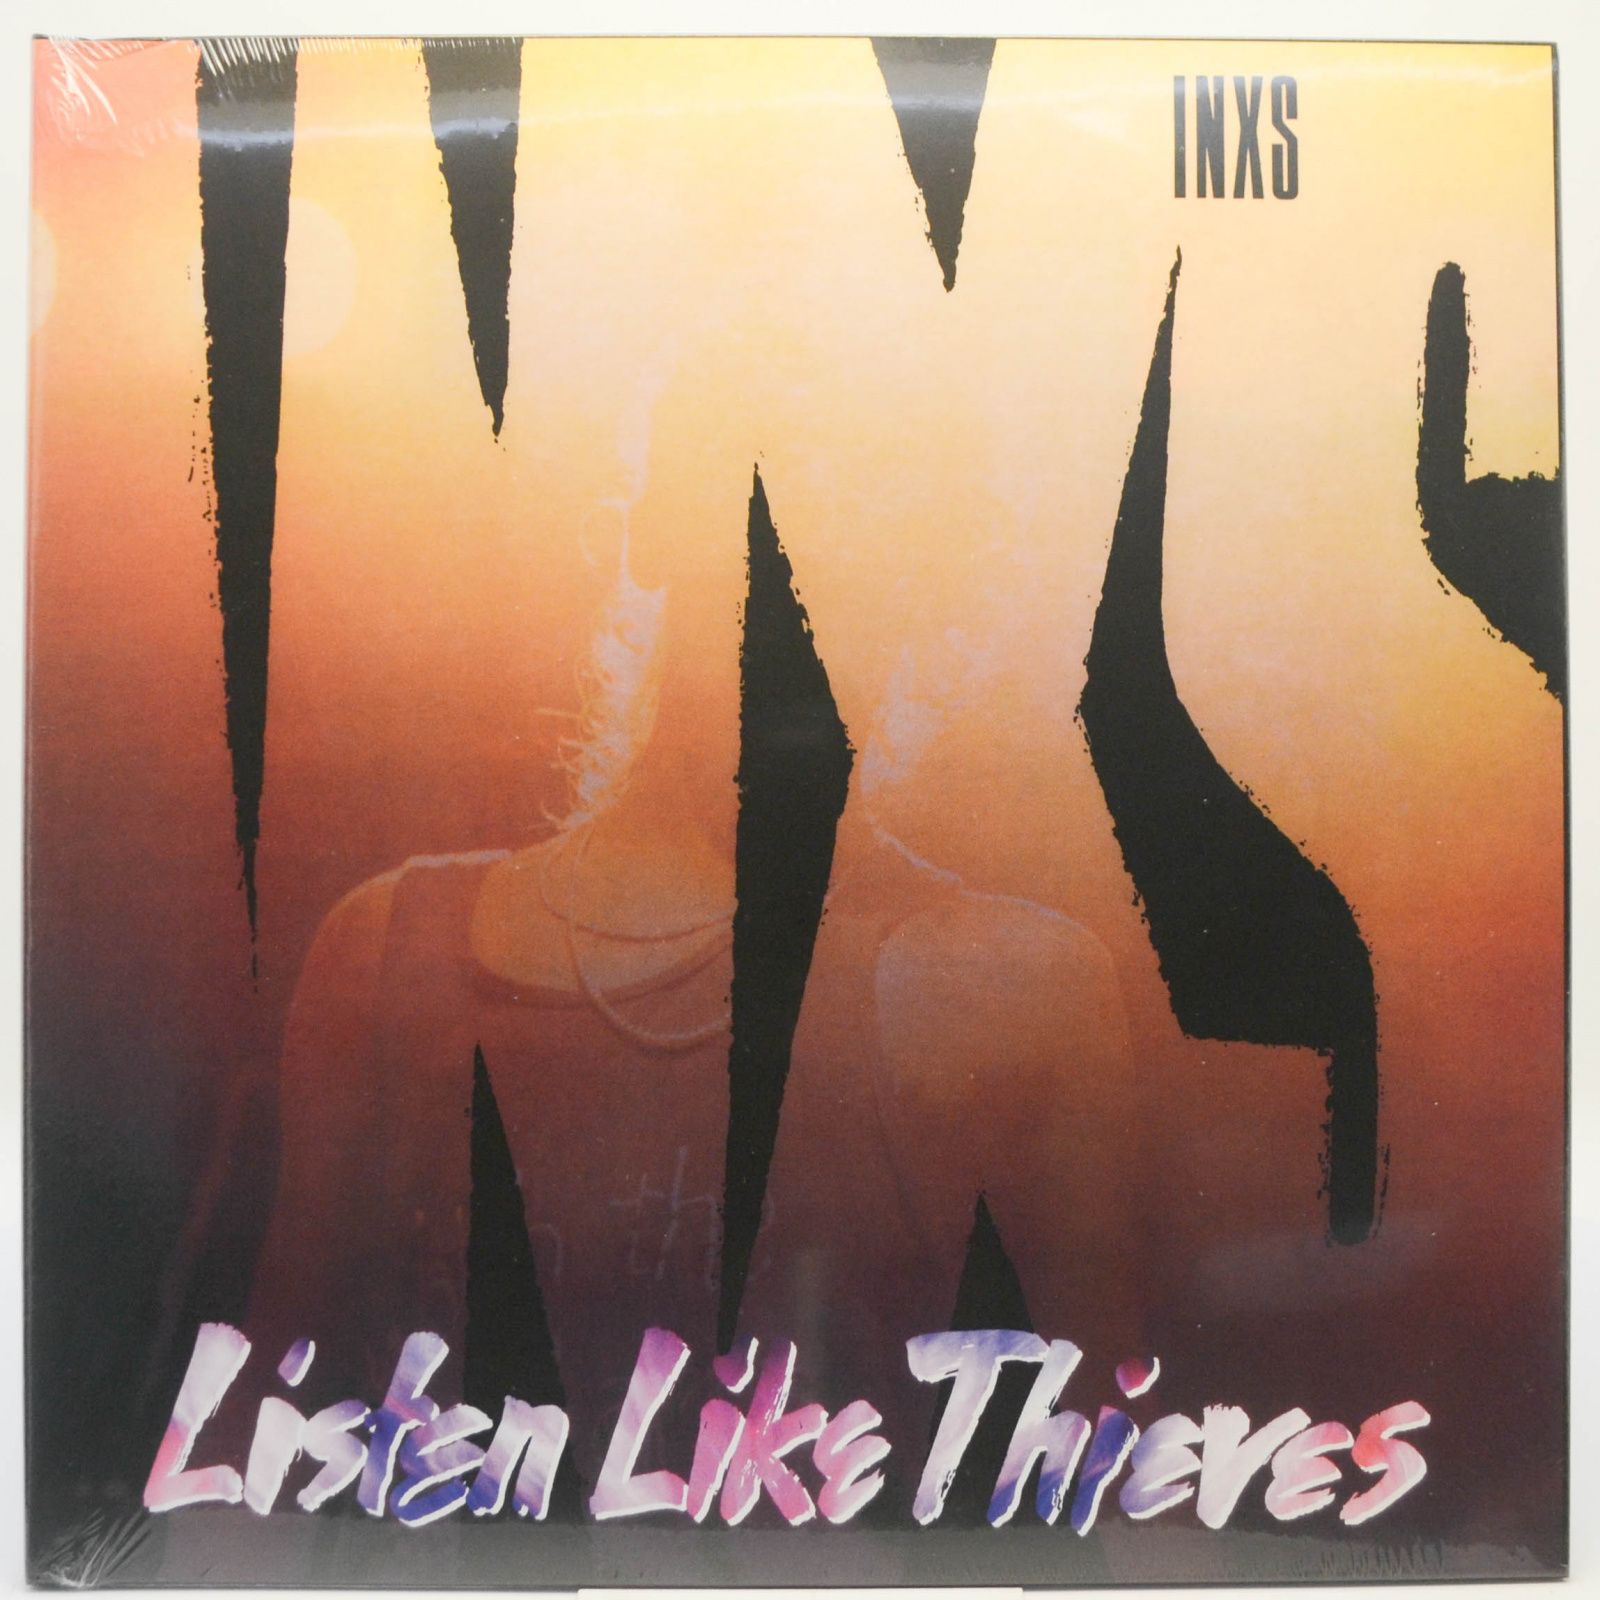 Listen Like Thieves, 1985